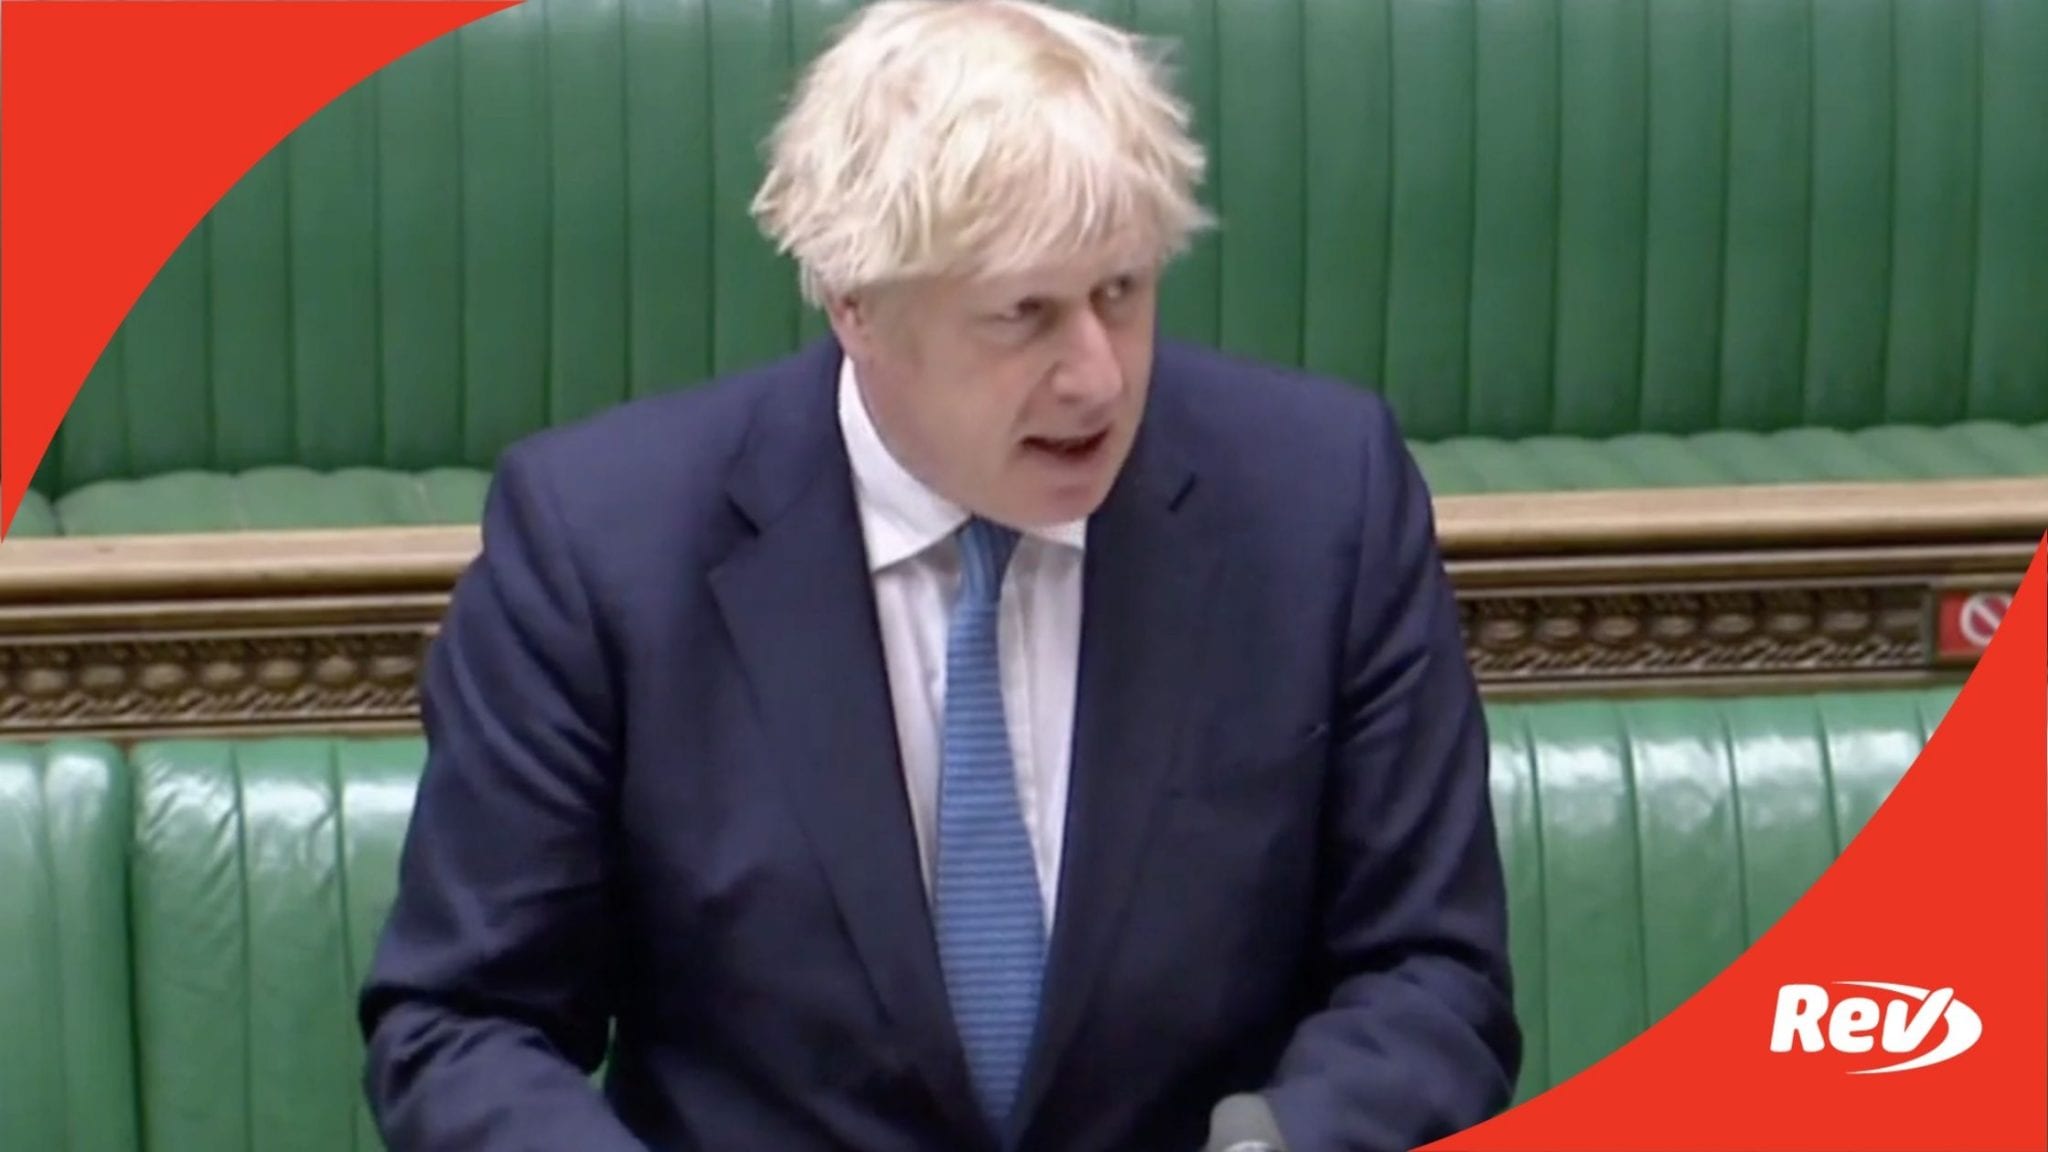 UK Prime Minister Boris Johnson COVID-19 Update Speech Transcript May 12